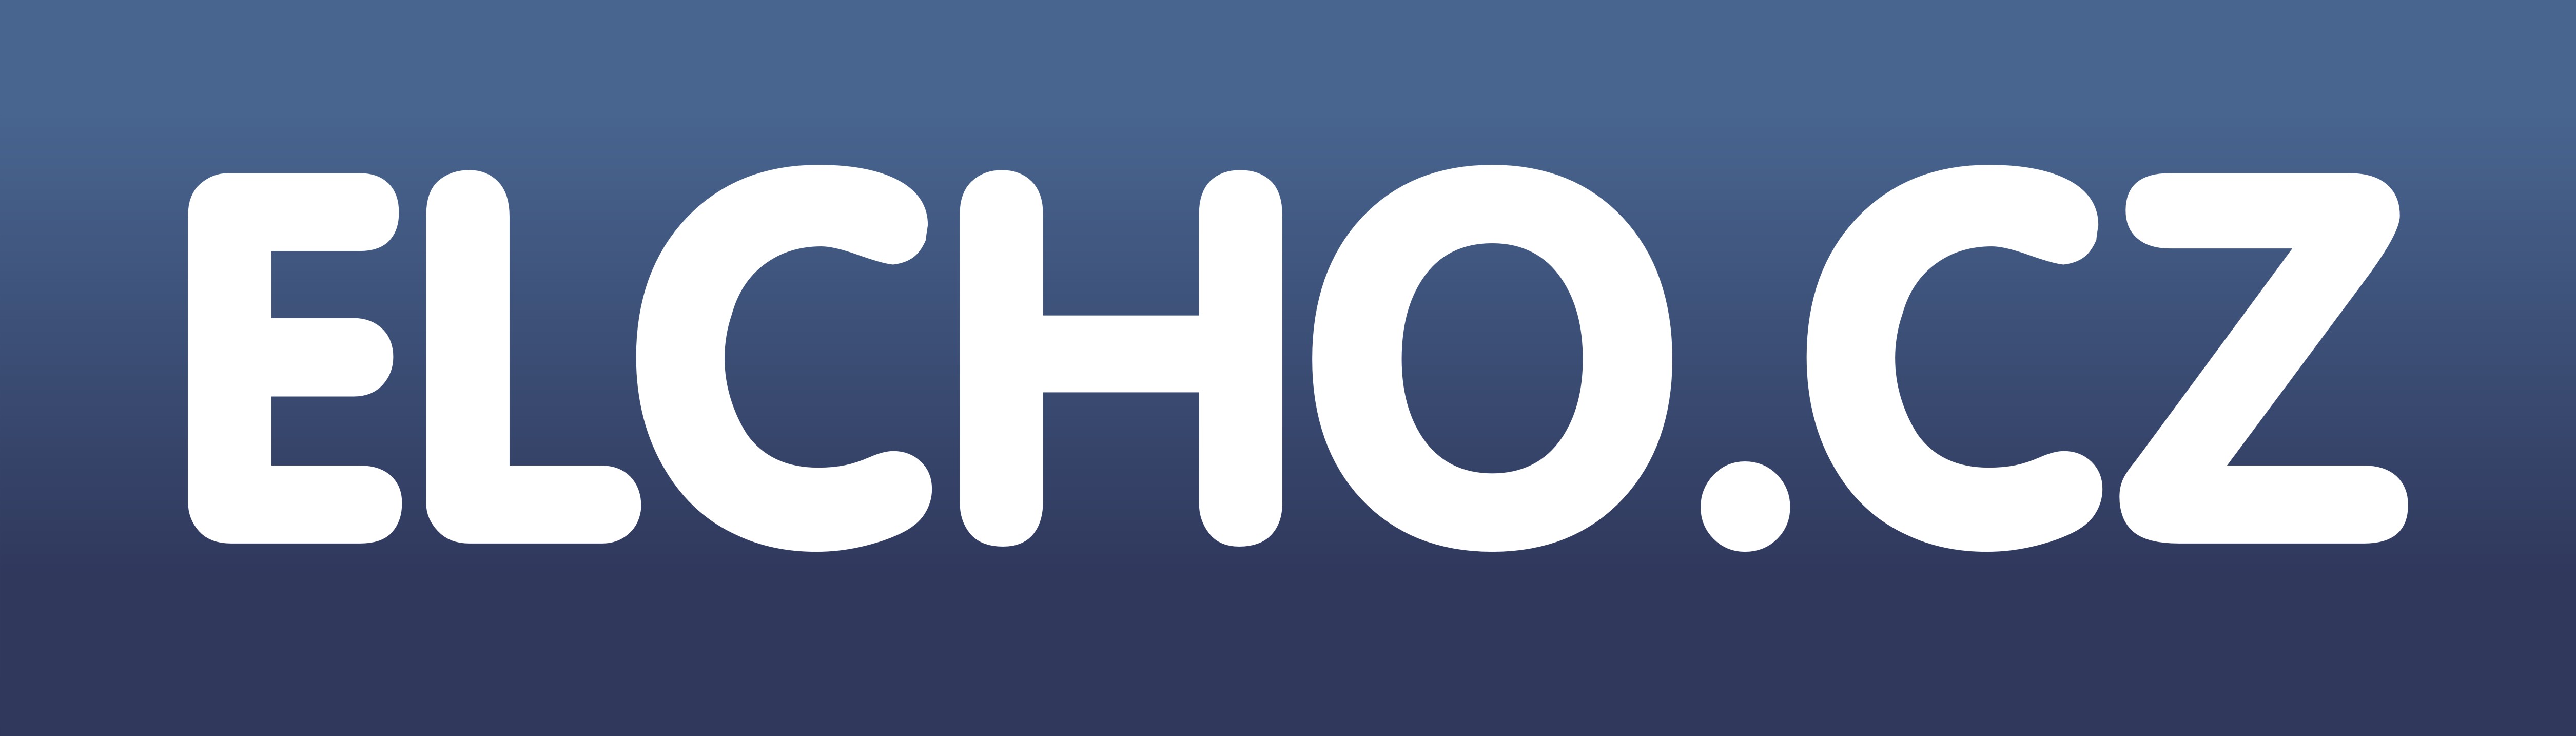 Logo Elcho